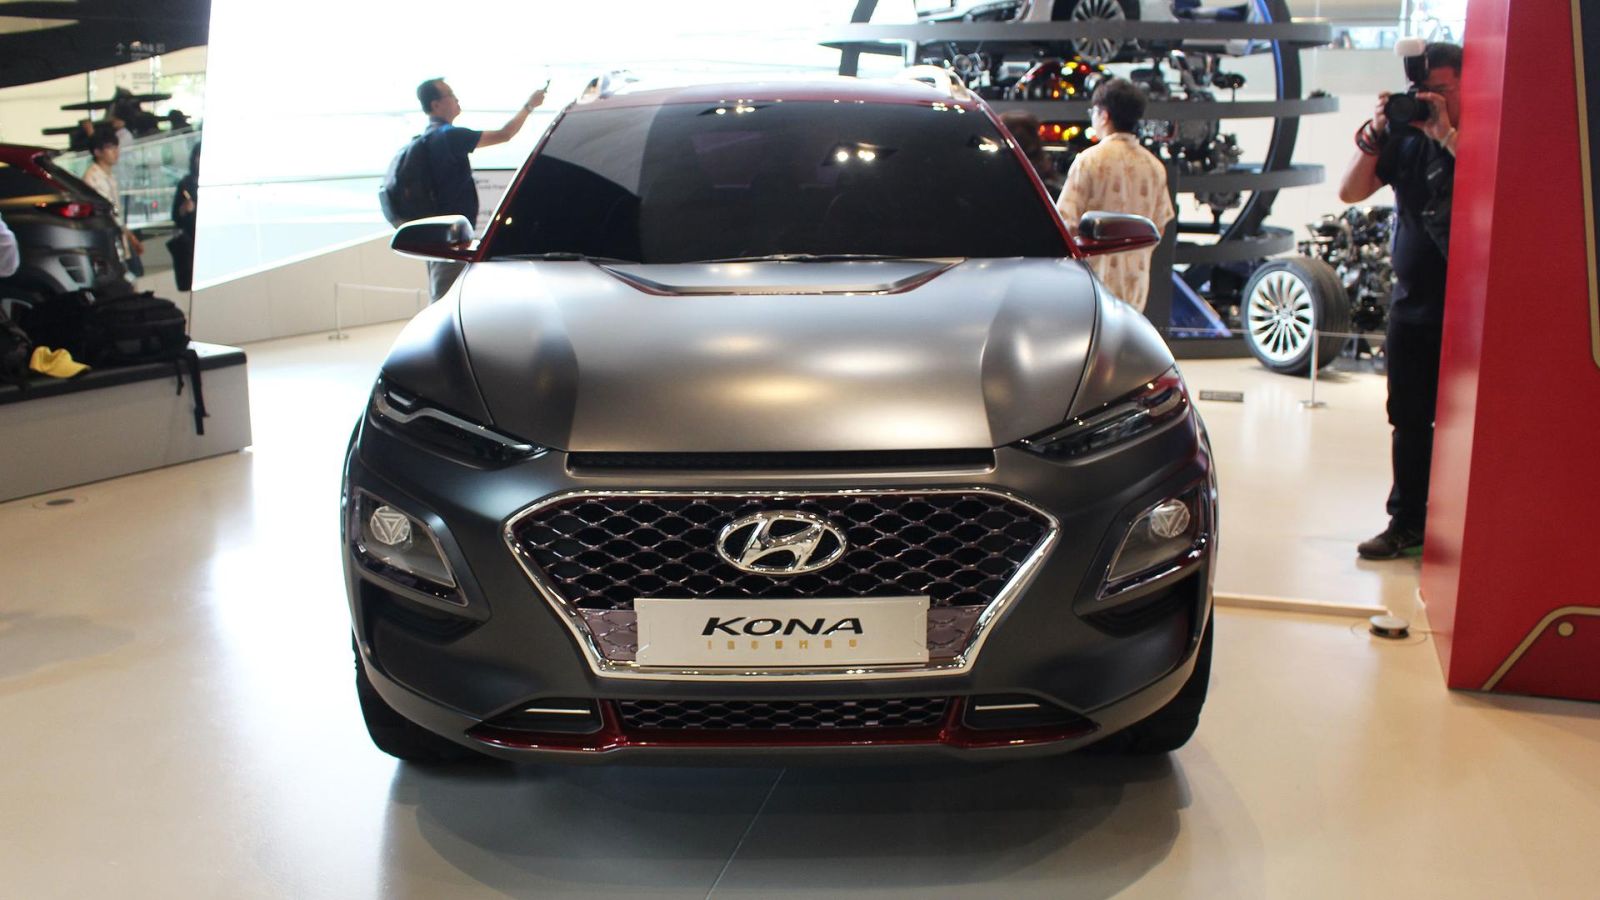 Check Out The Hyundai Kona Iron Man Special Edition